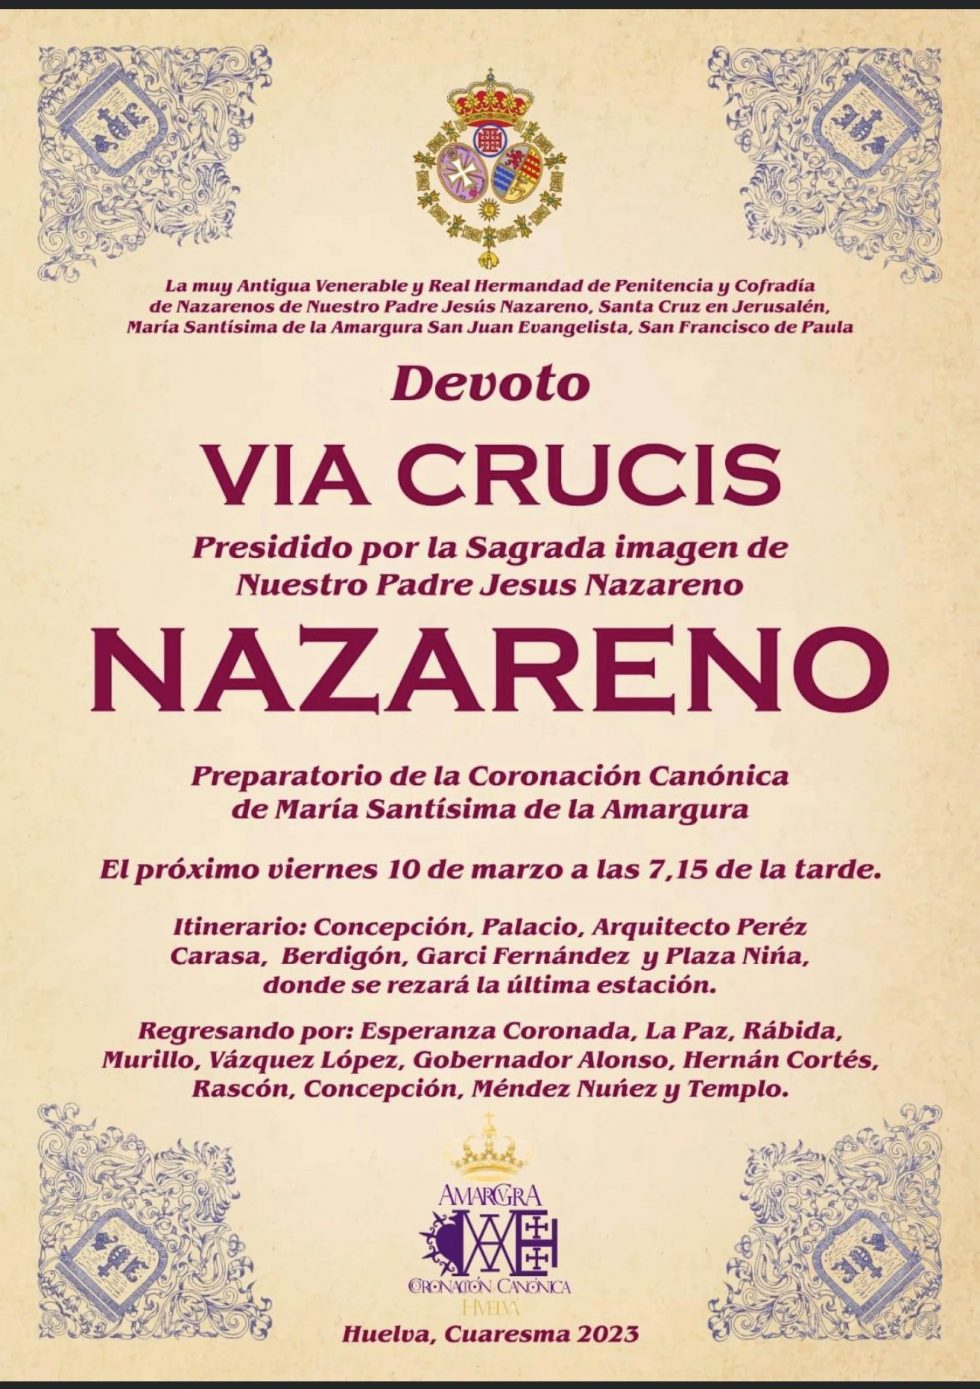 Viacrucis del Nazareno